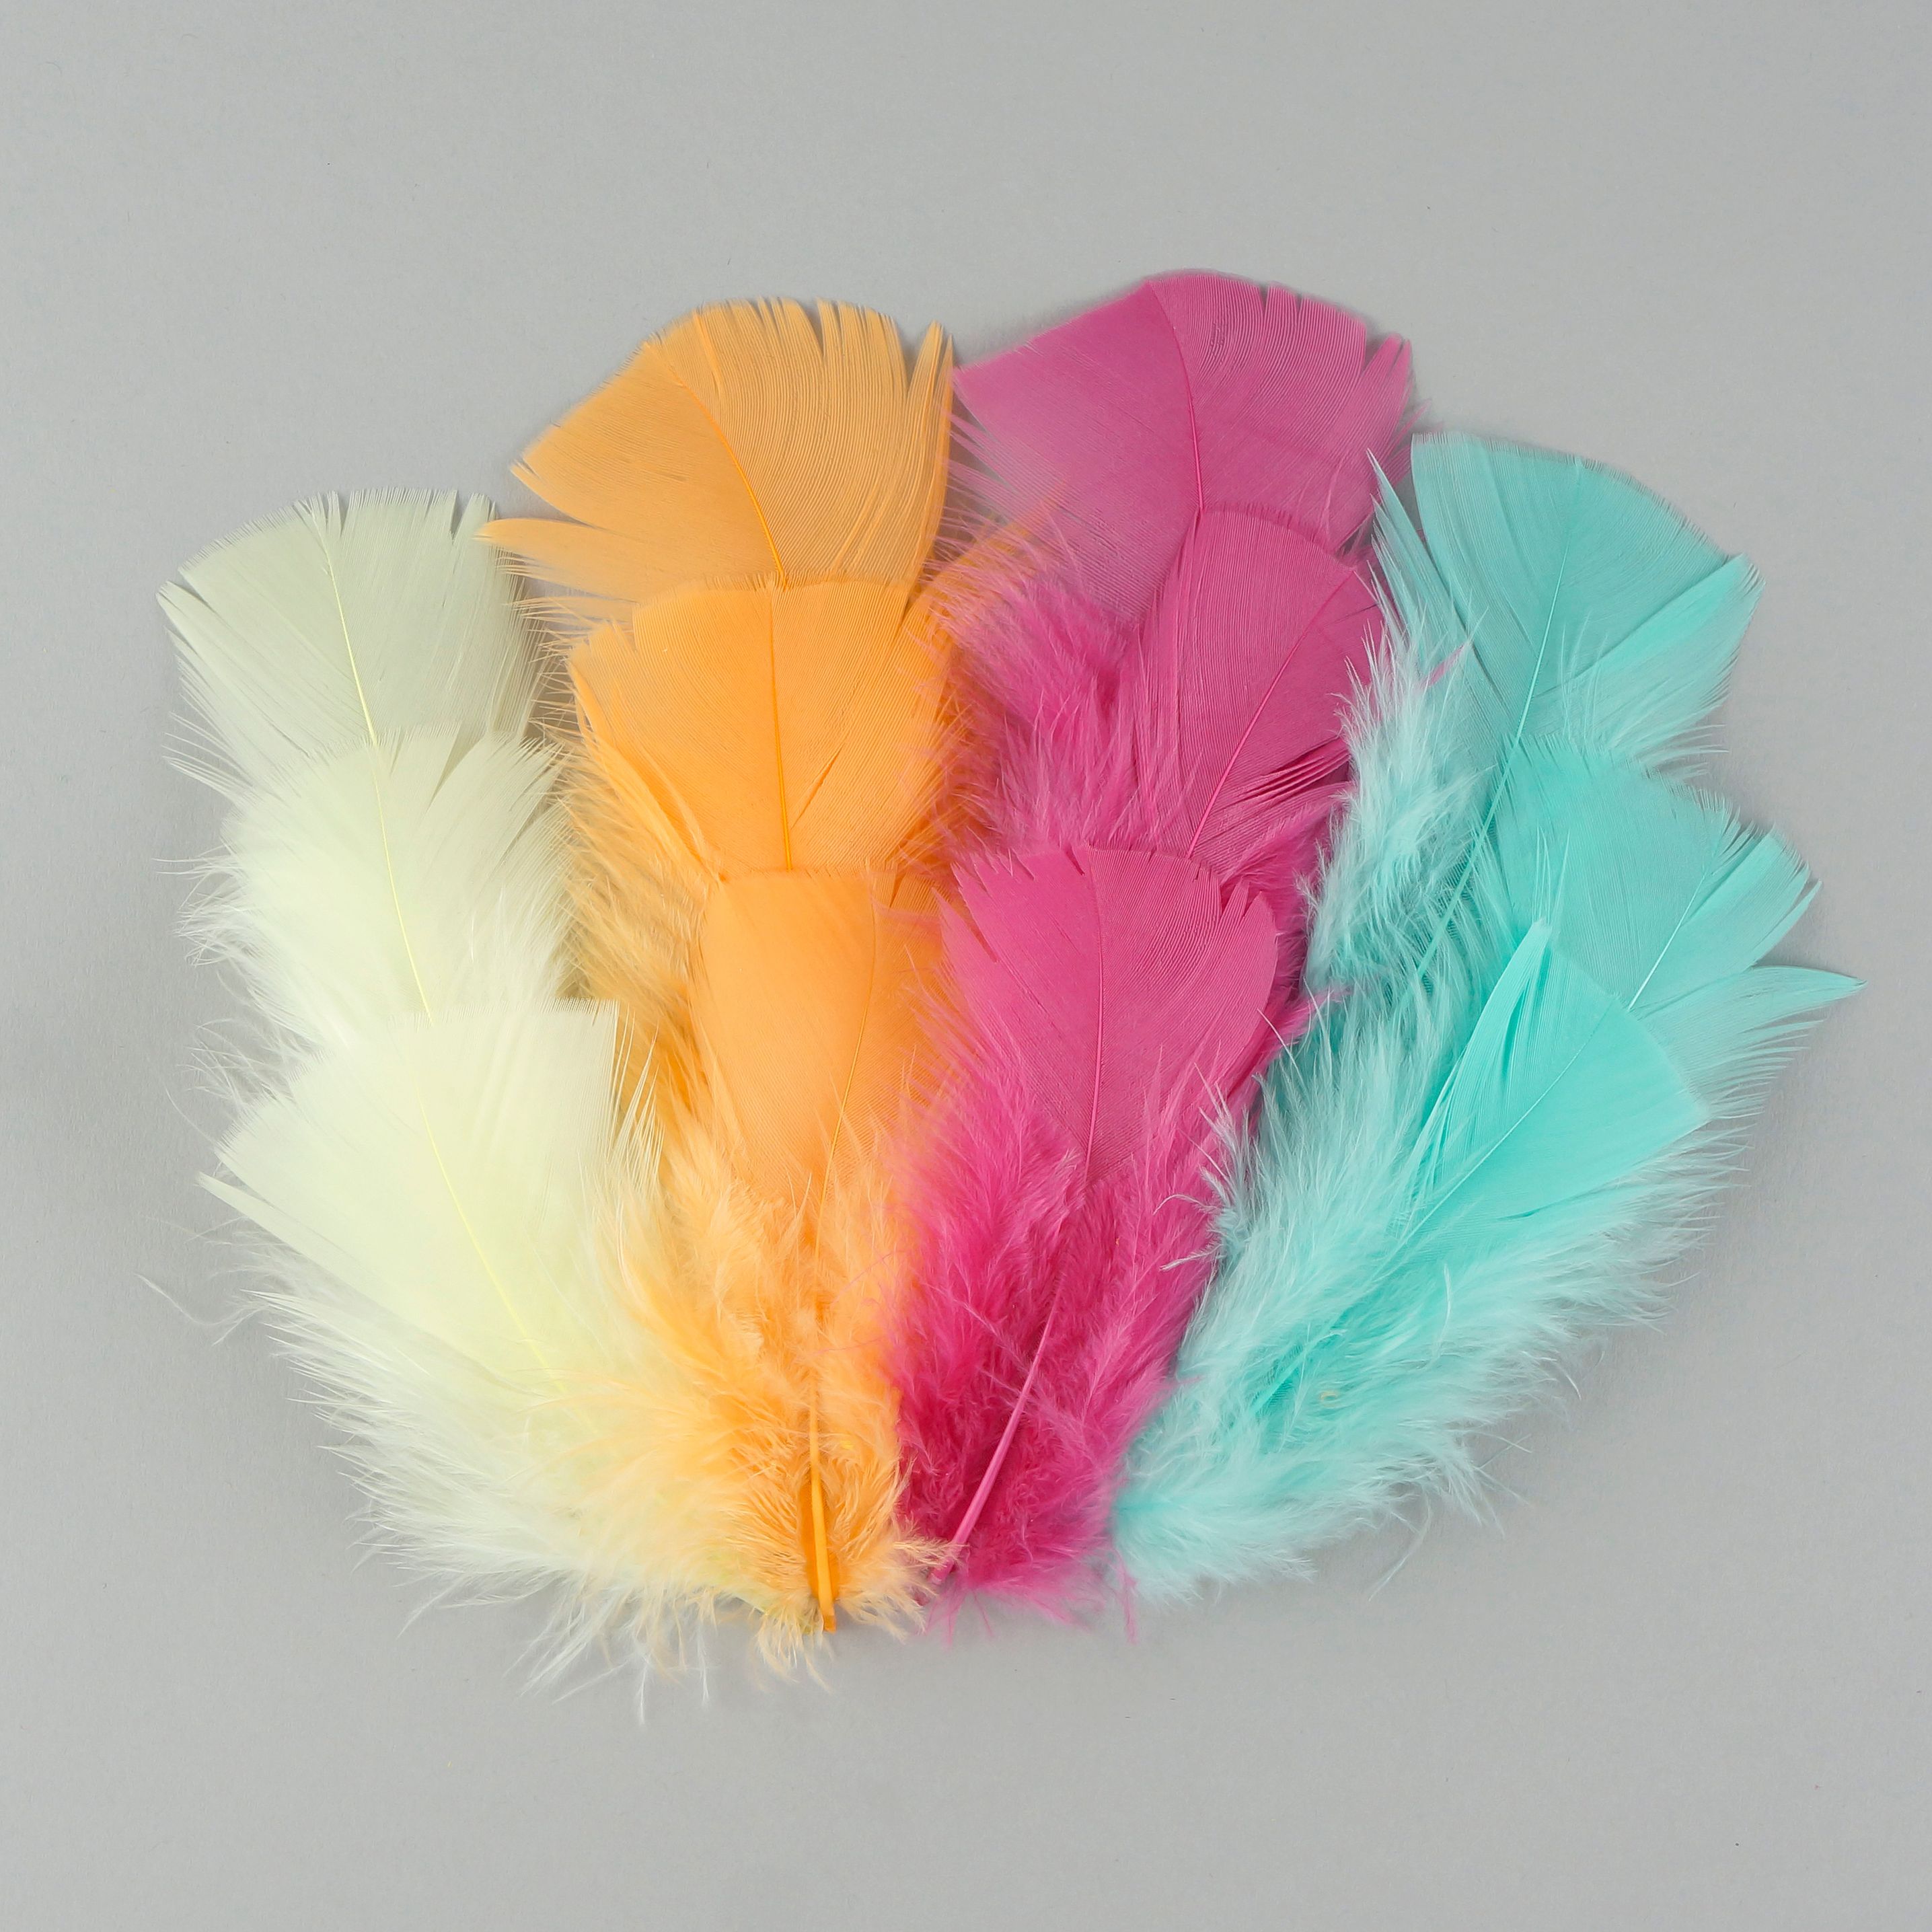 Zucker 3-5 inch Turkey Plumage Feathers for Crafts - .50 oz DIY Headdress,  Dream Catcher, Home Decor Craft Supplies - Mixed Colors 